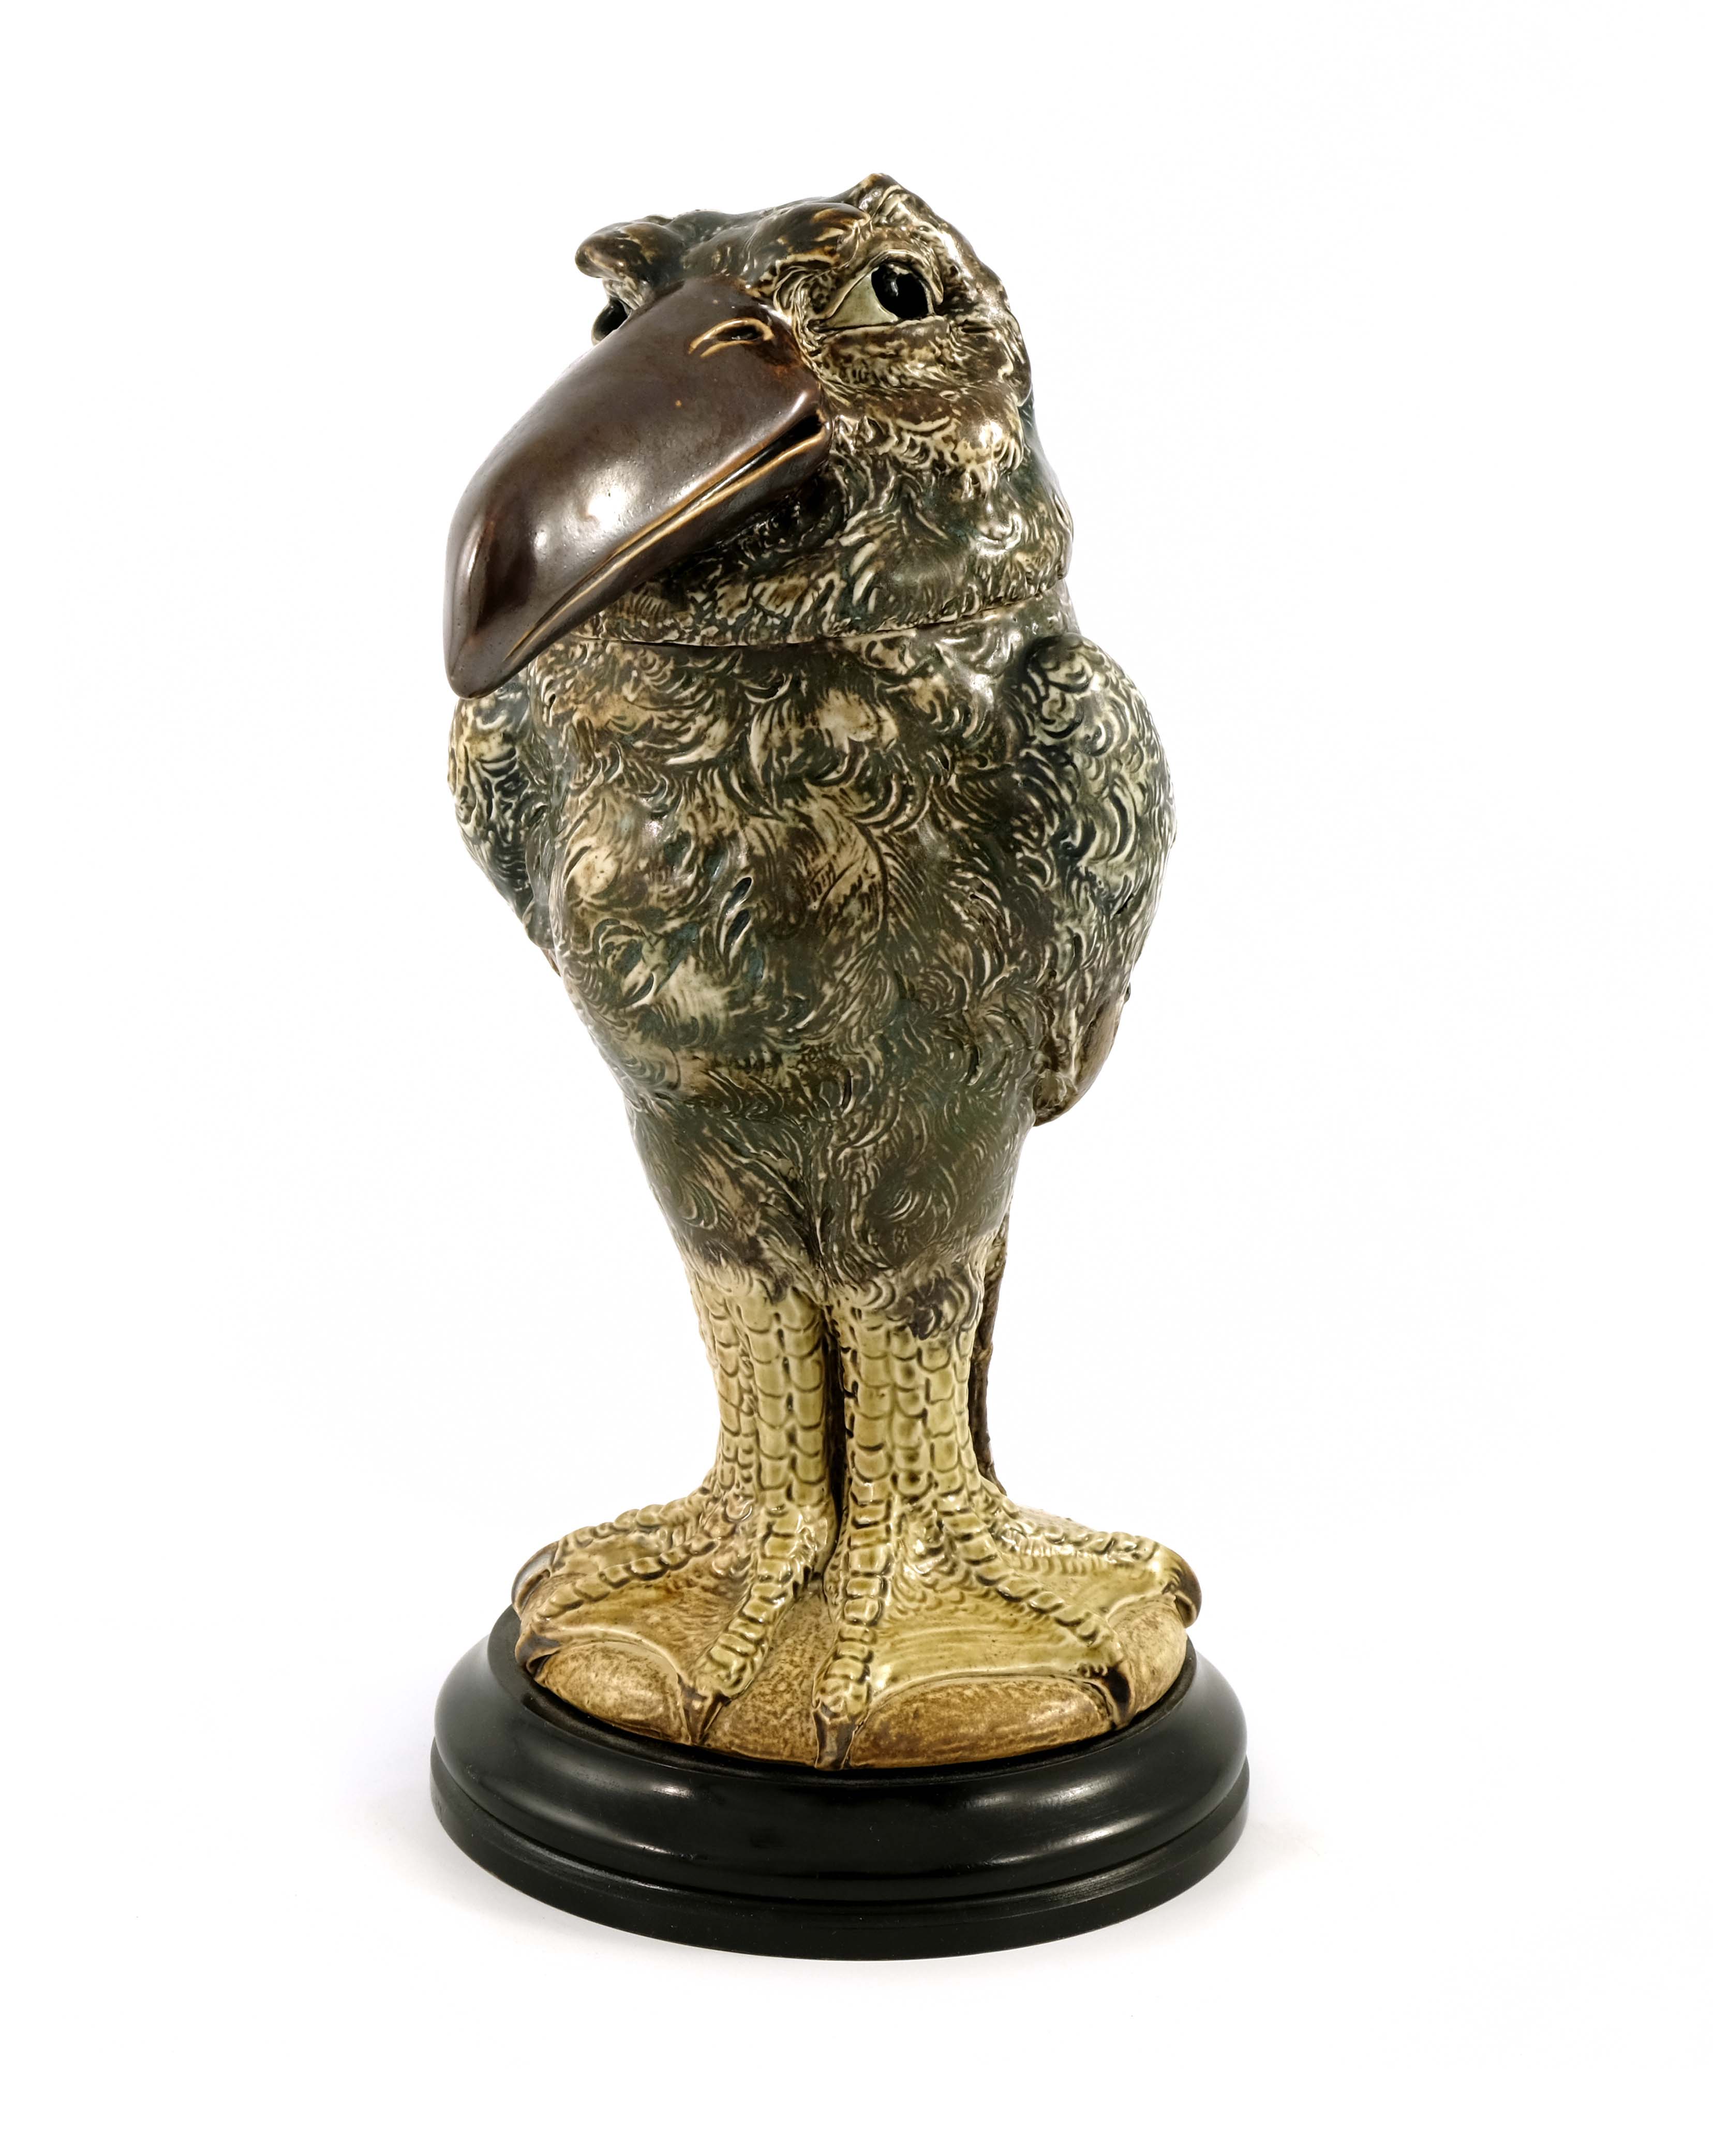 Robert Wallace Martin for Martin Brothers, a stoneware sculptural bird jar and cover